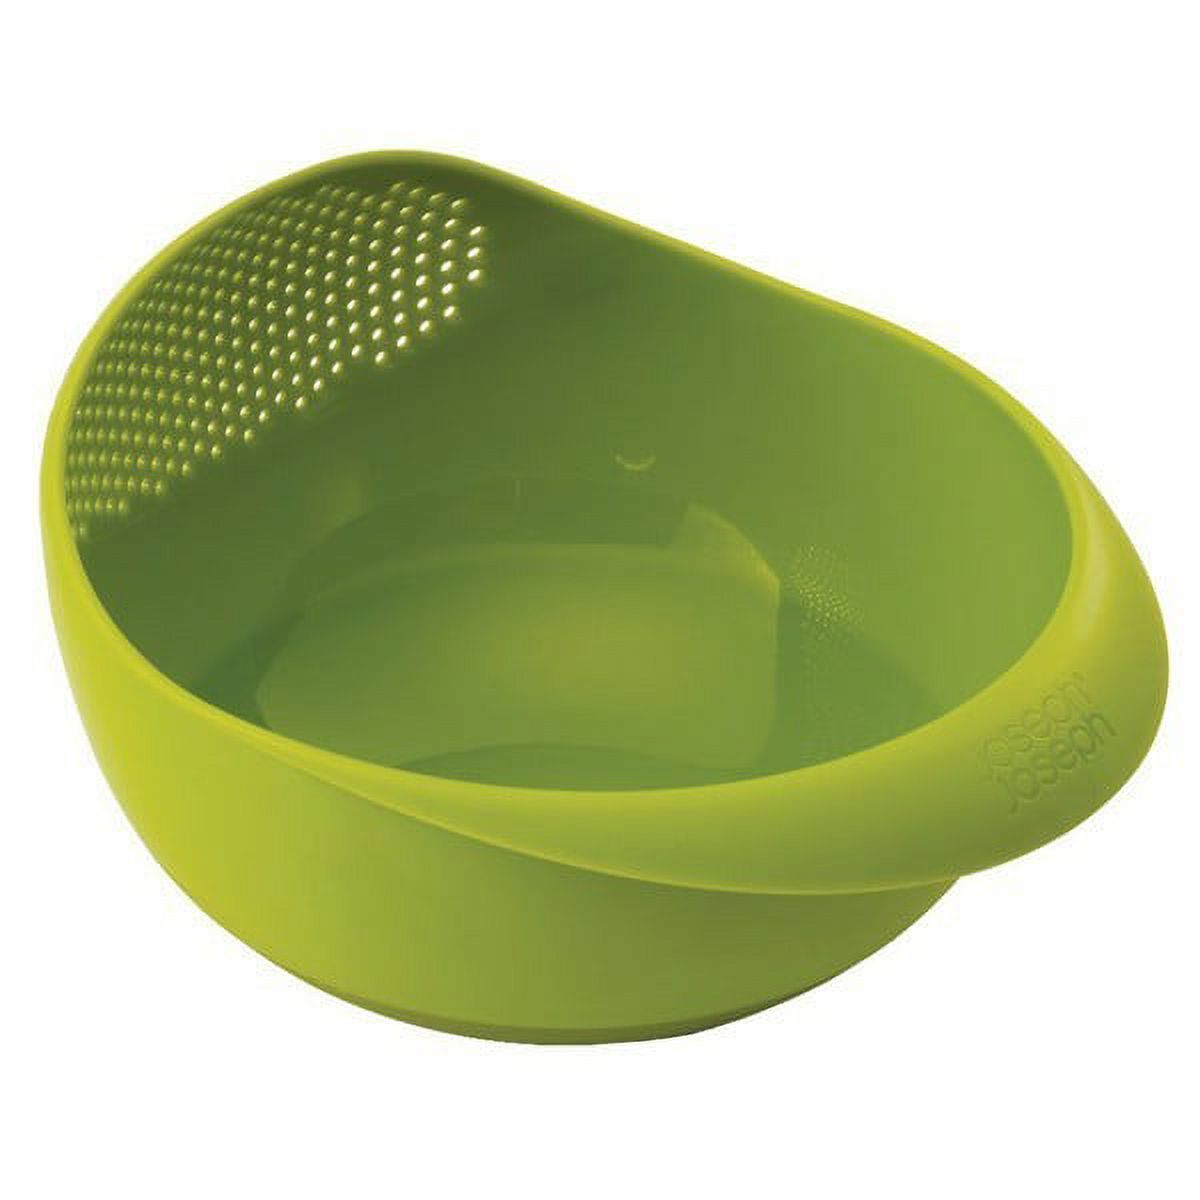 Joseph Joseph Prep & Serve Multi-Function Bowl with Integrated Colander, Large - Green - image 1 of 4